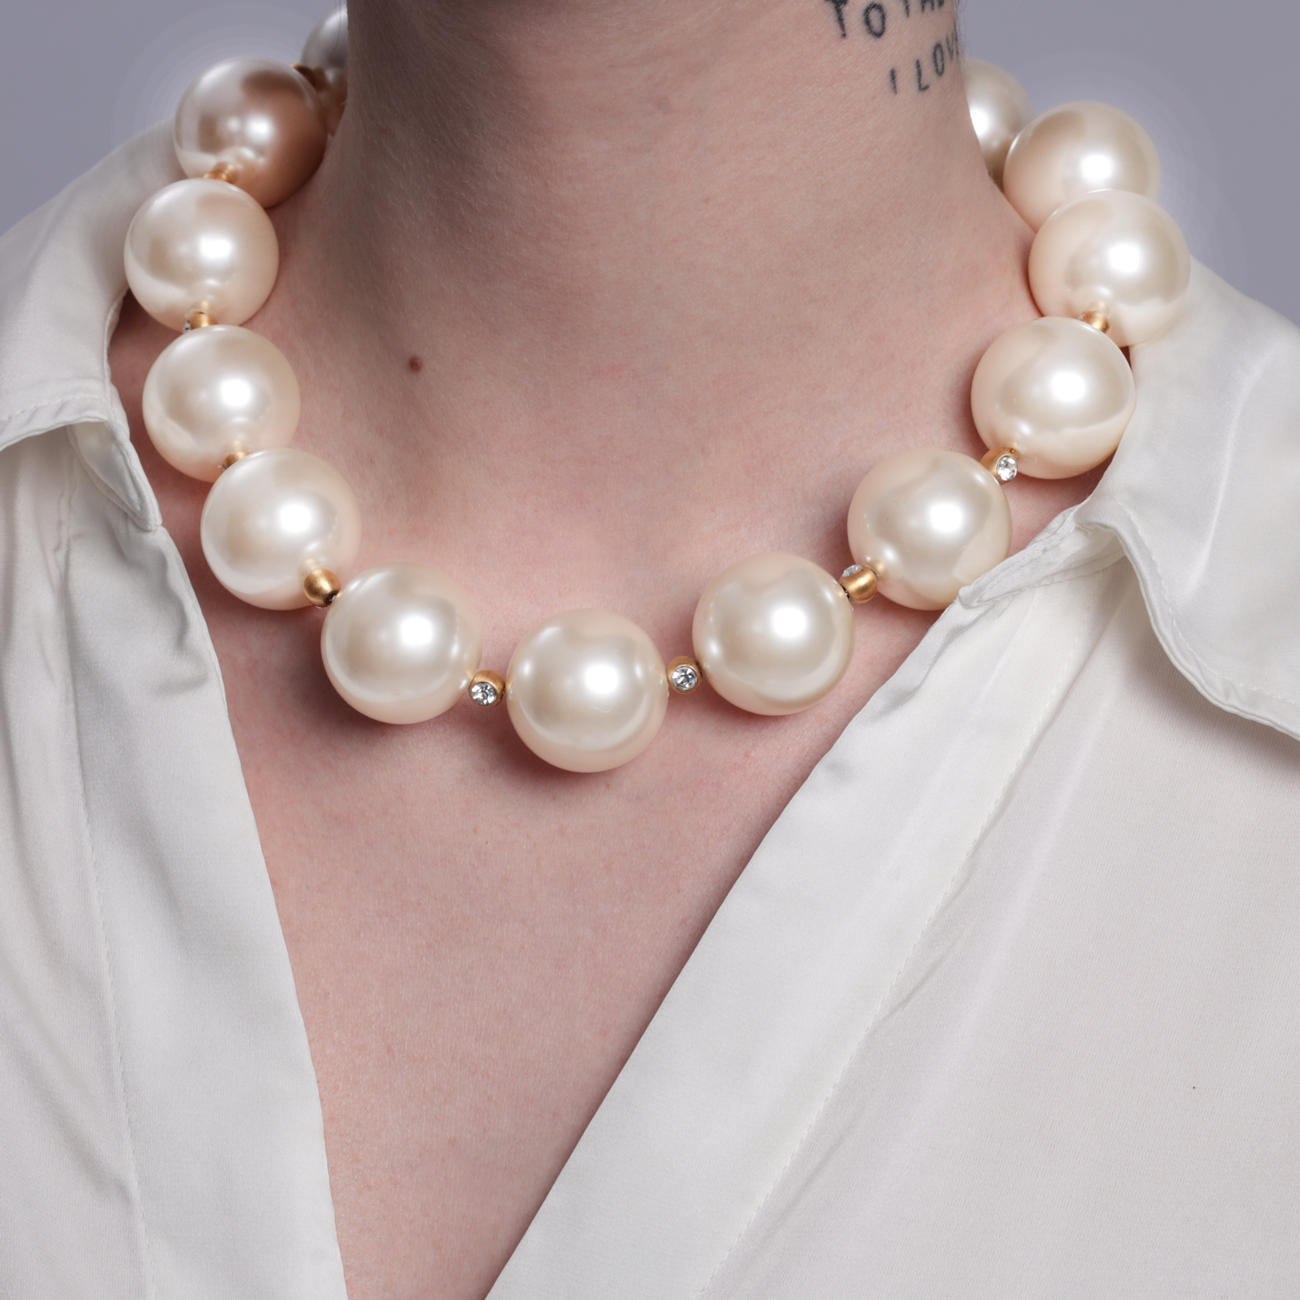 Jumbo pearl necklace